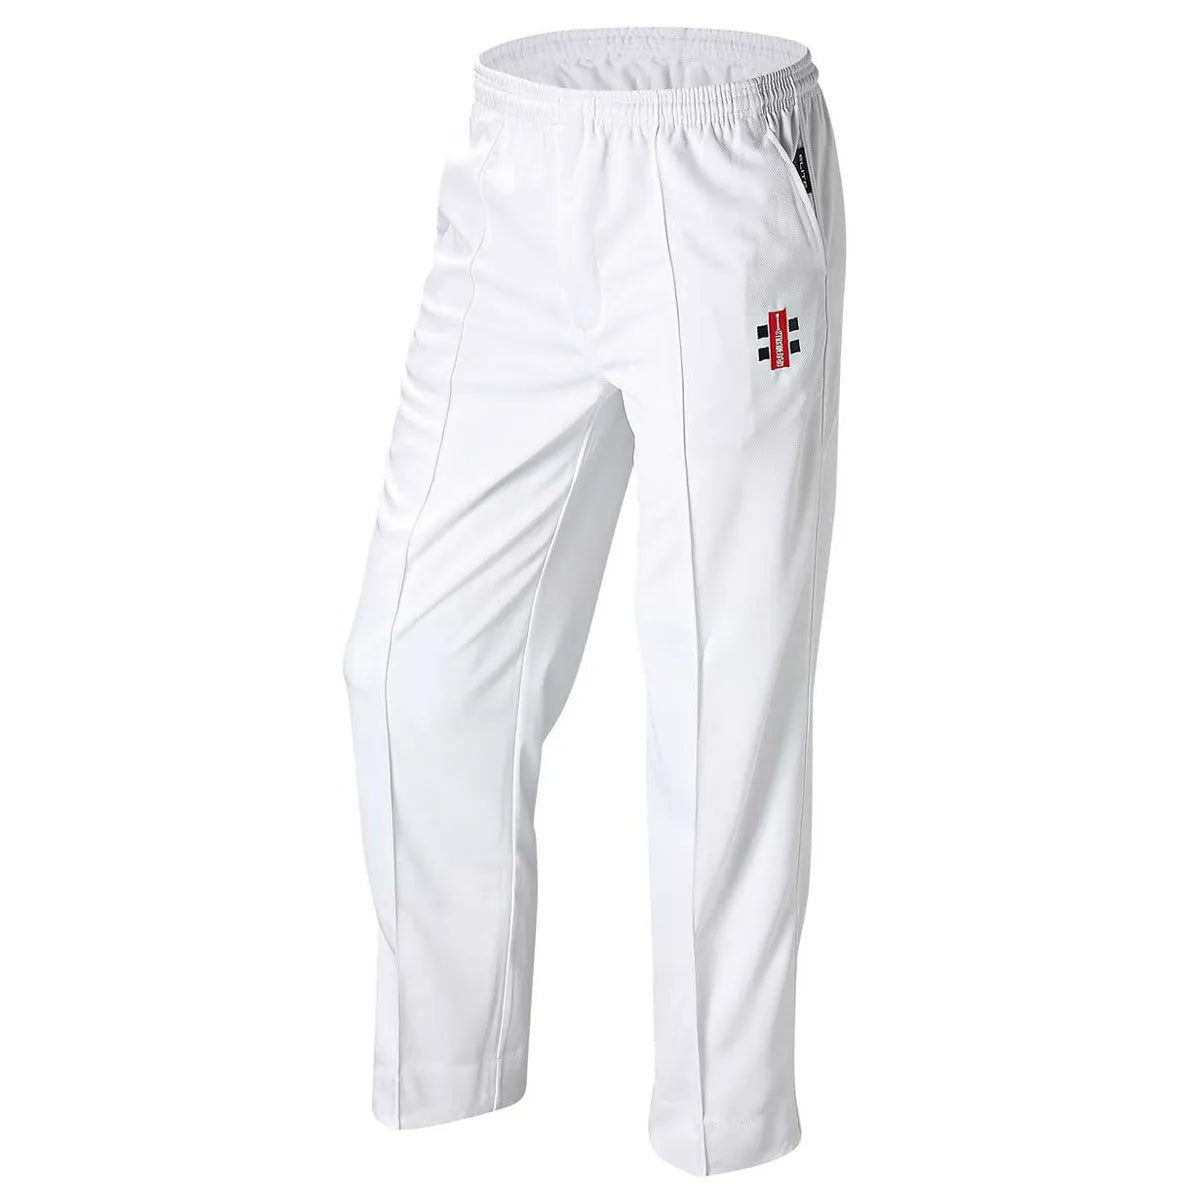 Gray Nicolls Cricket White Full Pants